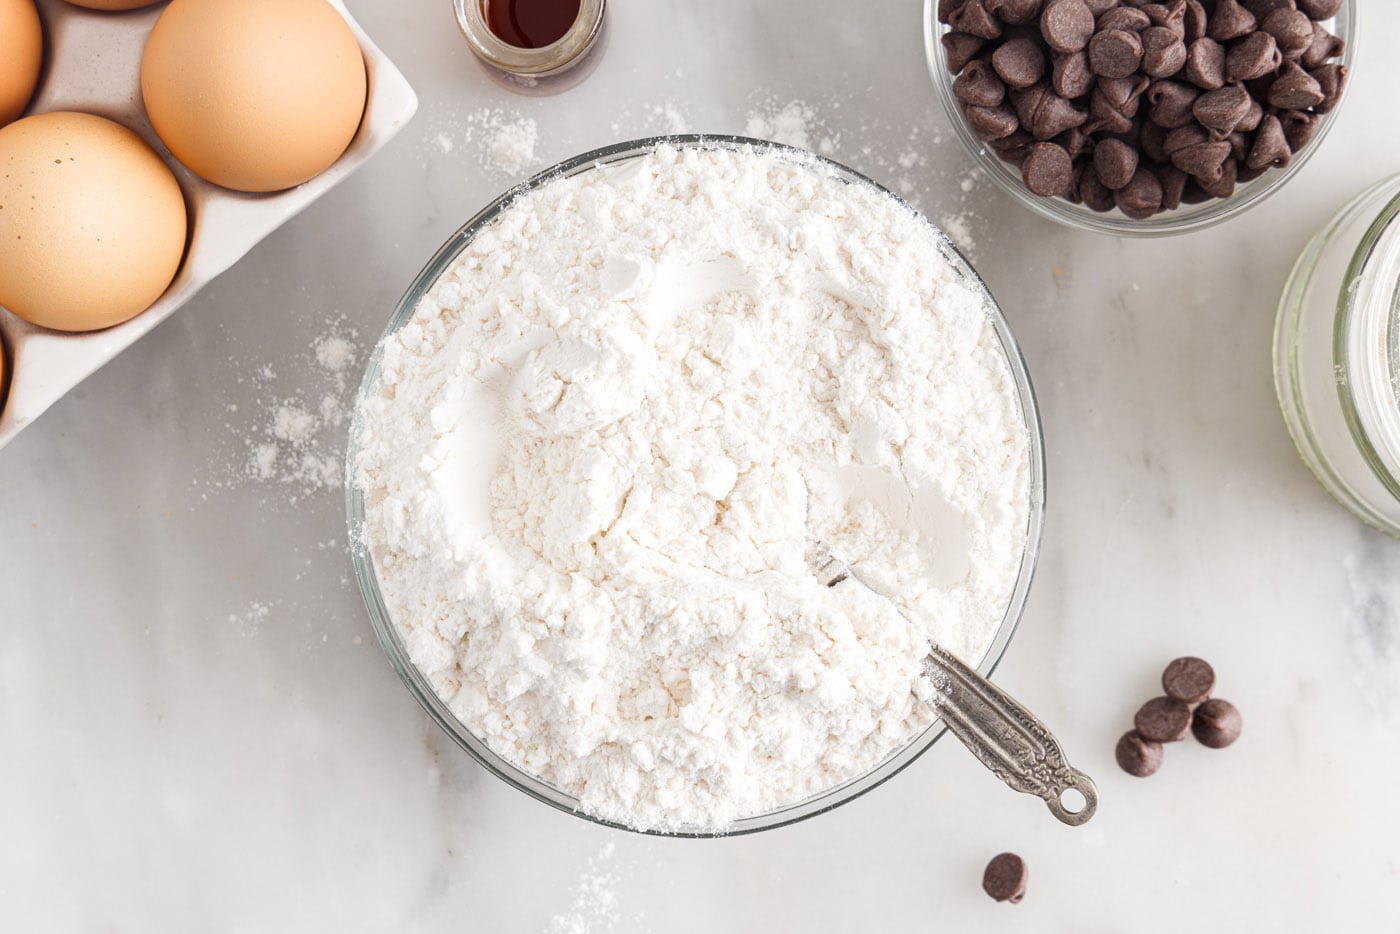 flour, baking soda, and salt in a bowl